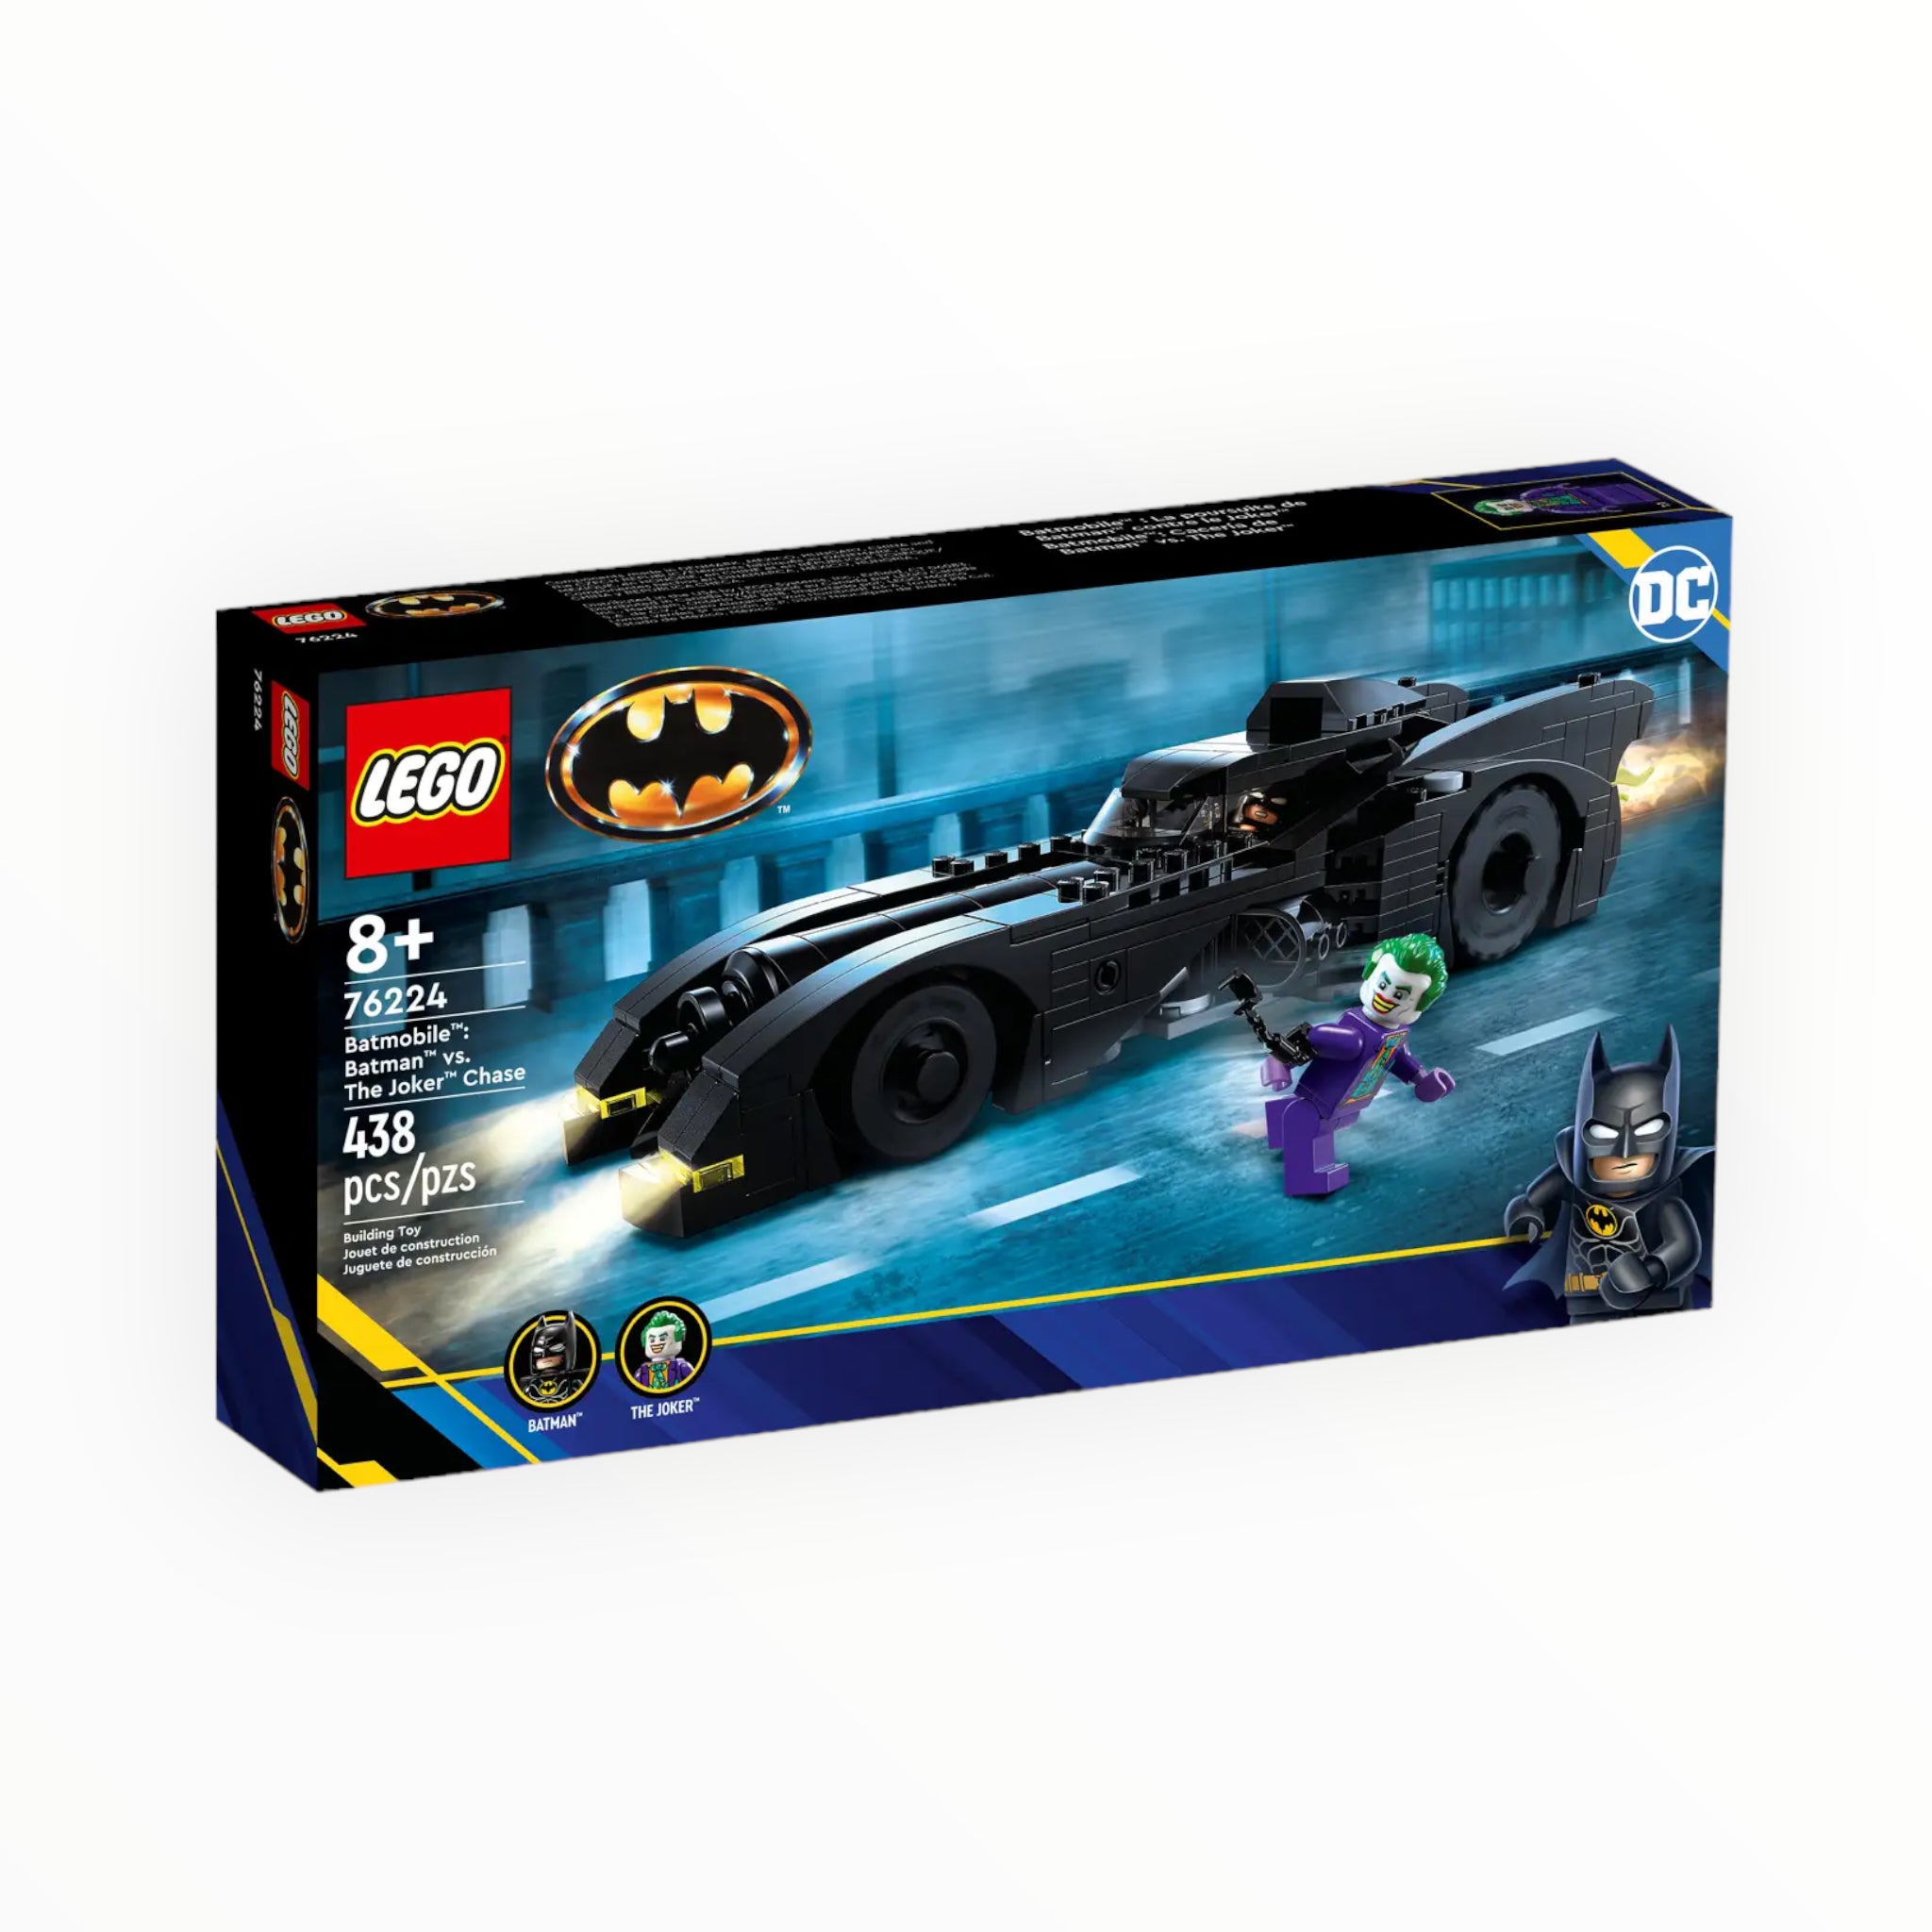 76224 DC Batmobile: Batman vs. The Joker Chase